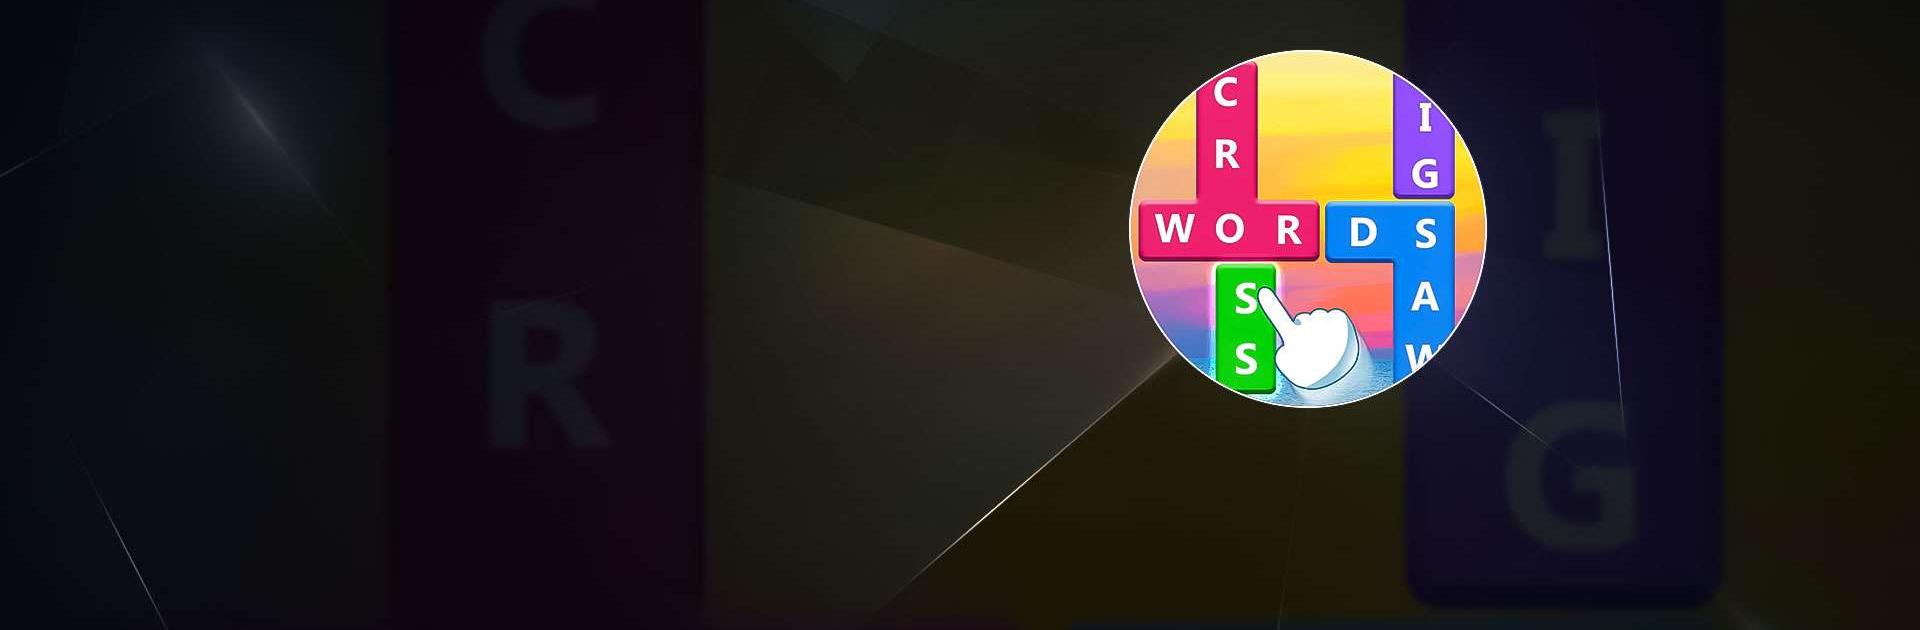 Word Cross Jigsaw - Word Games